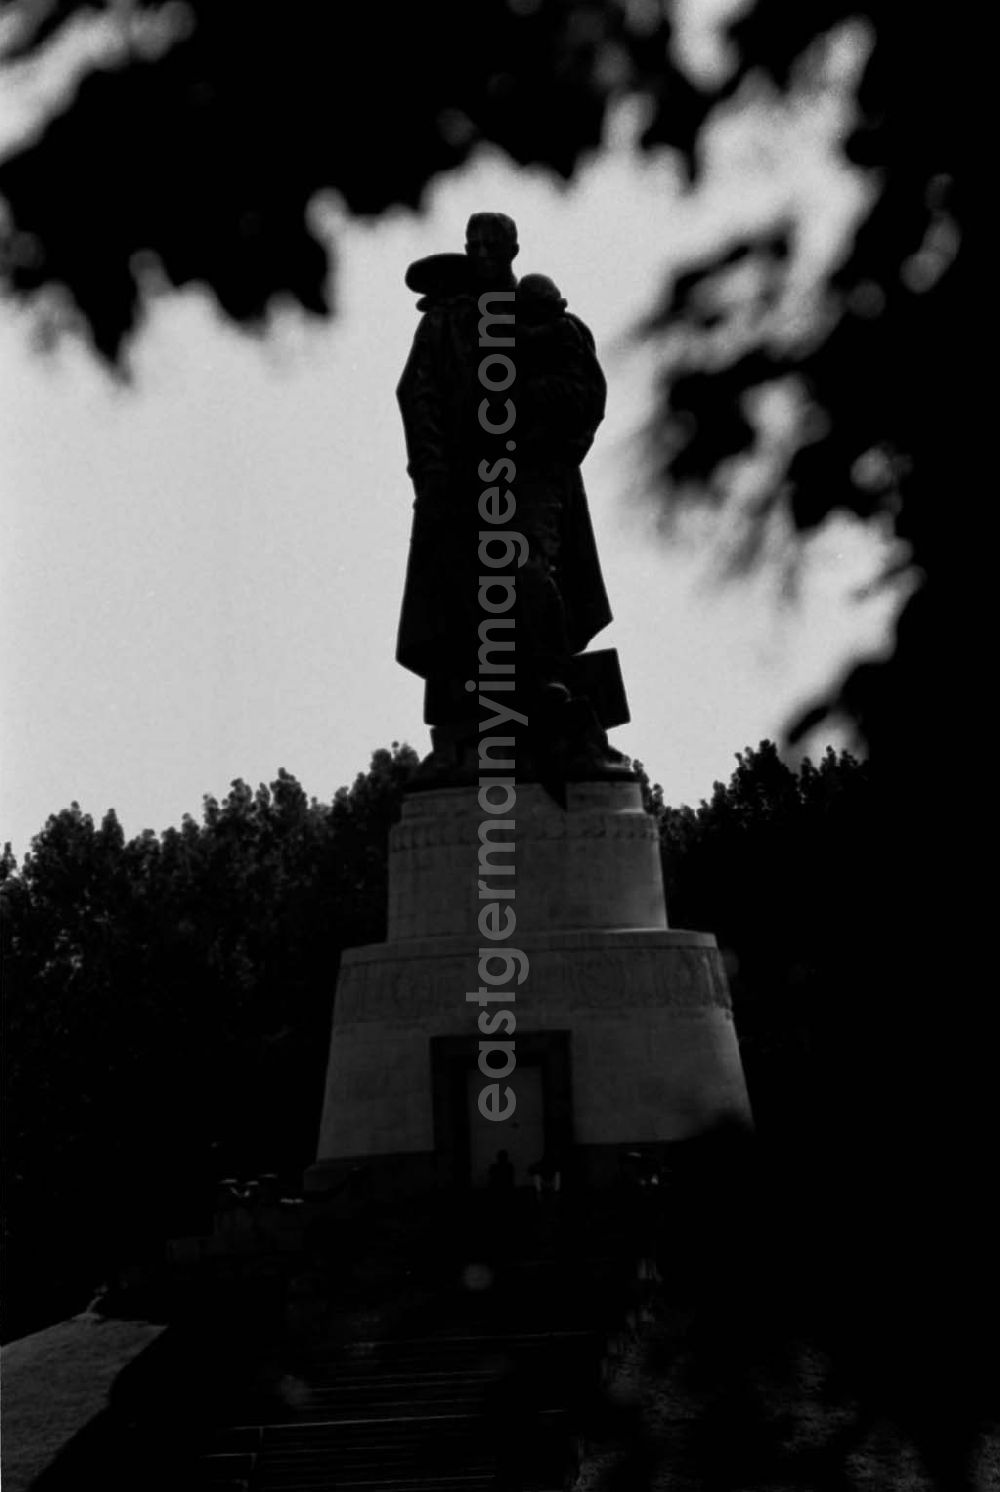 GDR photo archive: Berlin-Treptow - Ehrenmal Treptow von Sperrung bedroht 10.09.